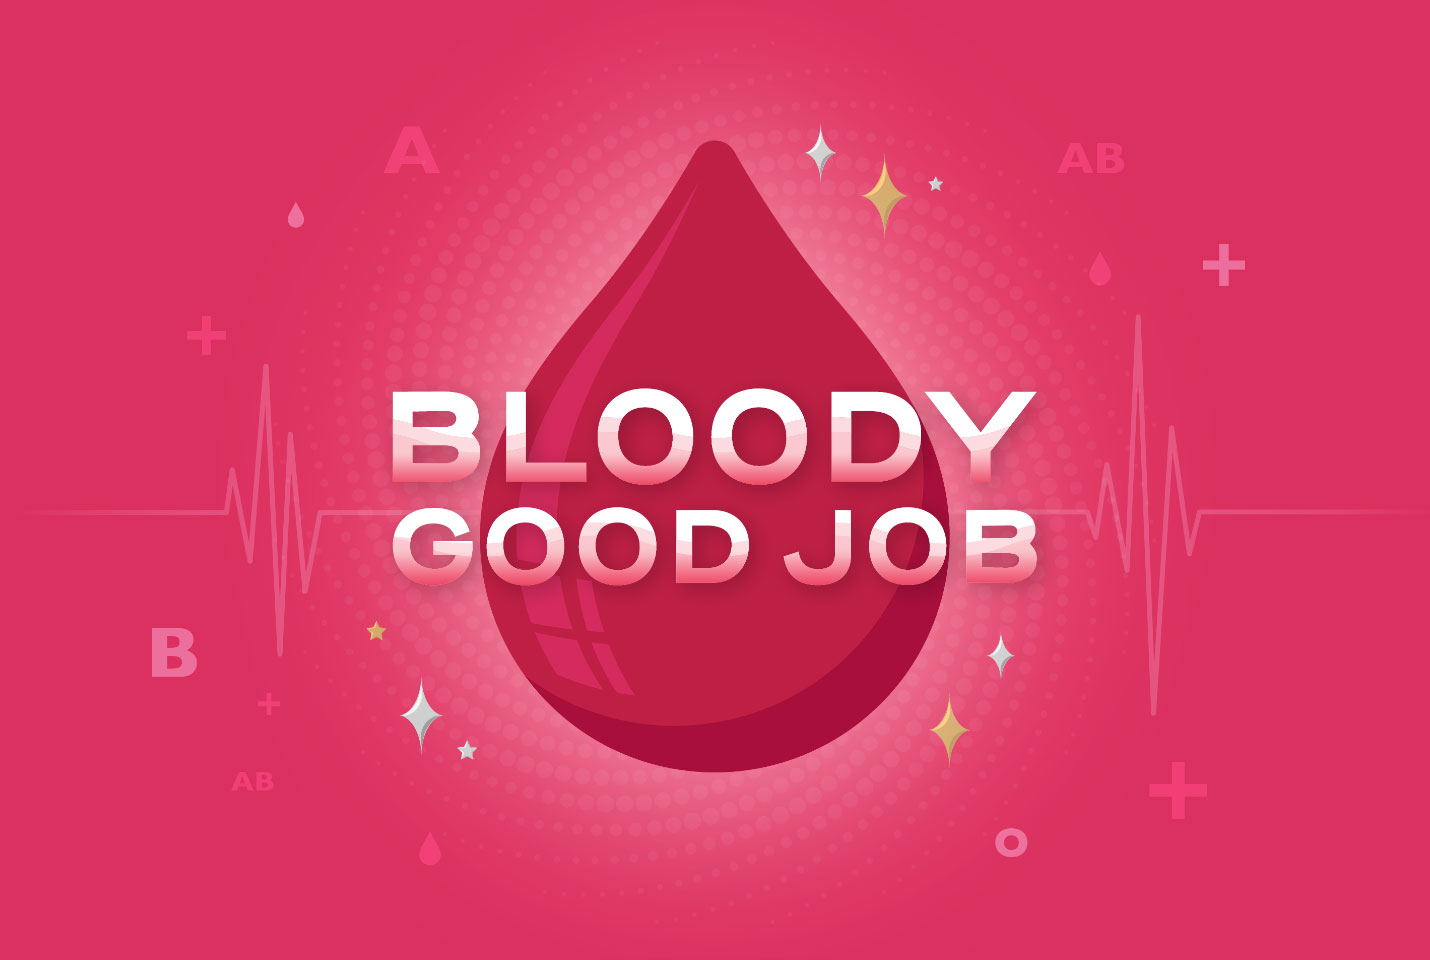 BLOODY GOOD JOB